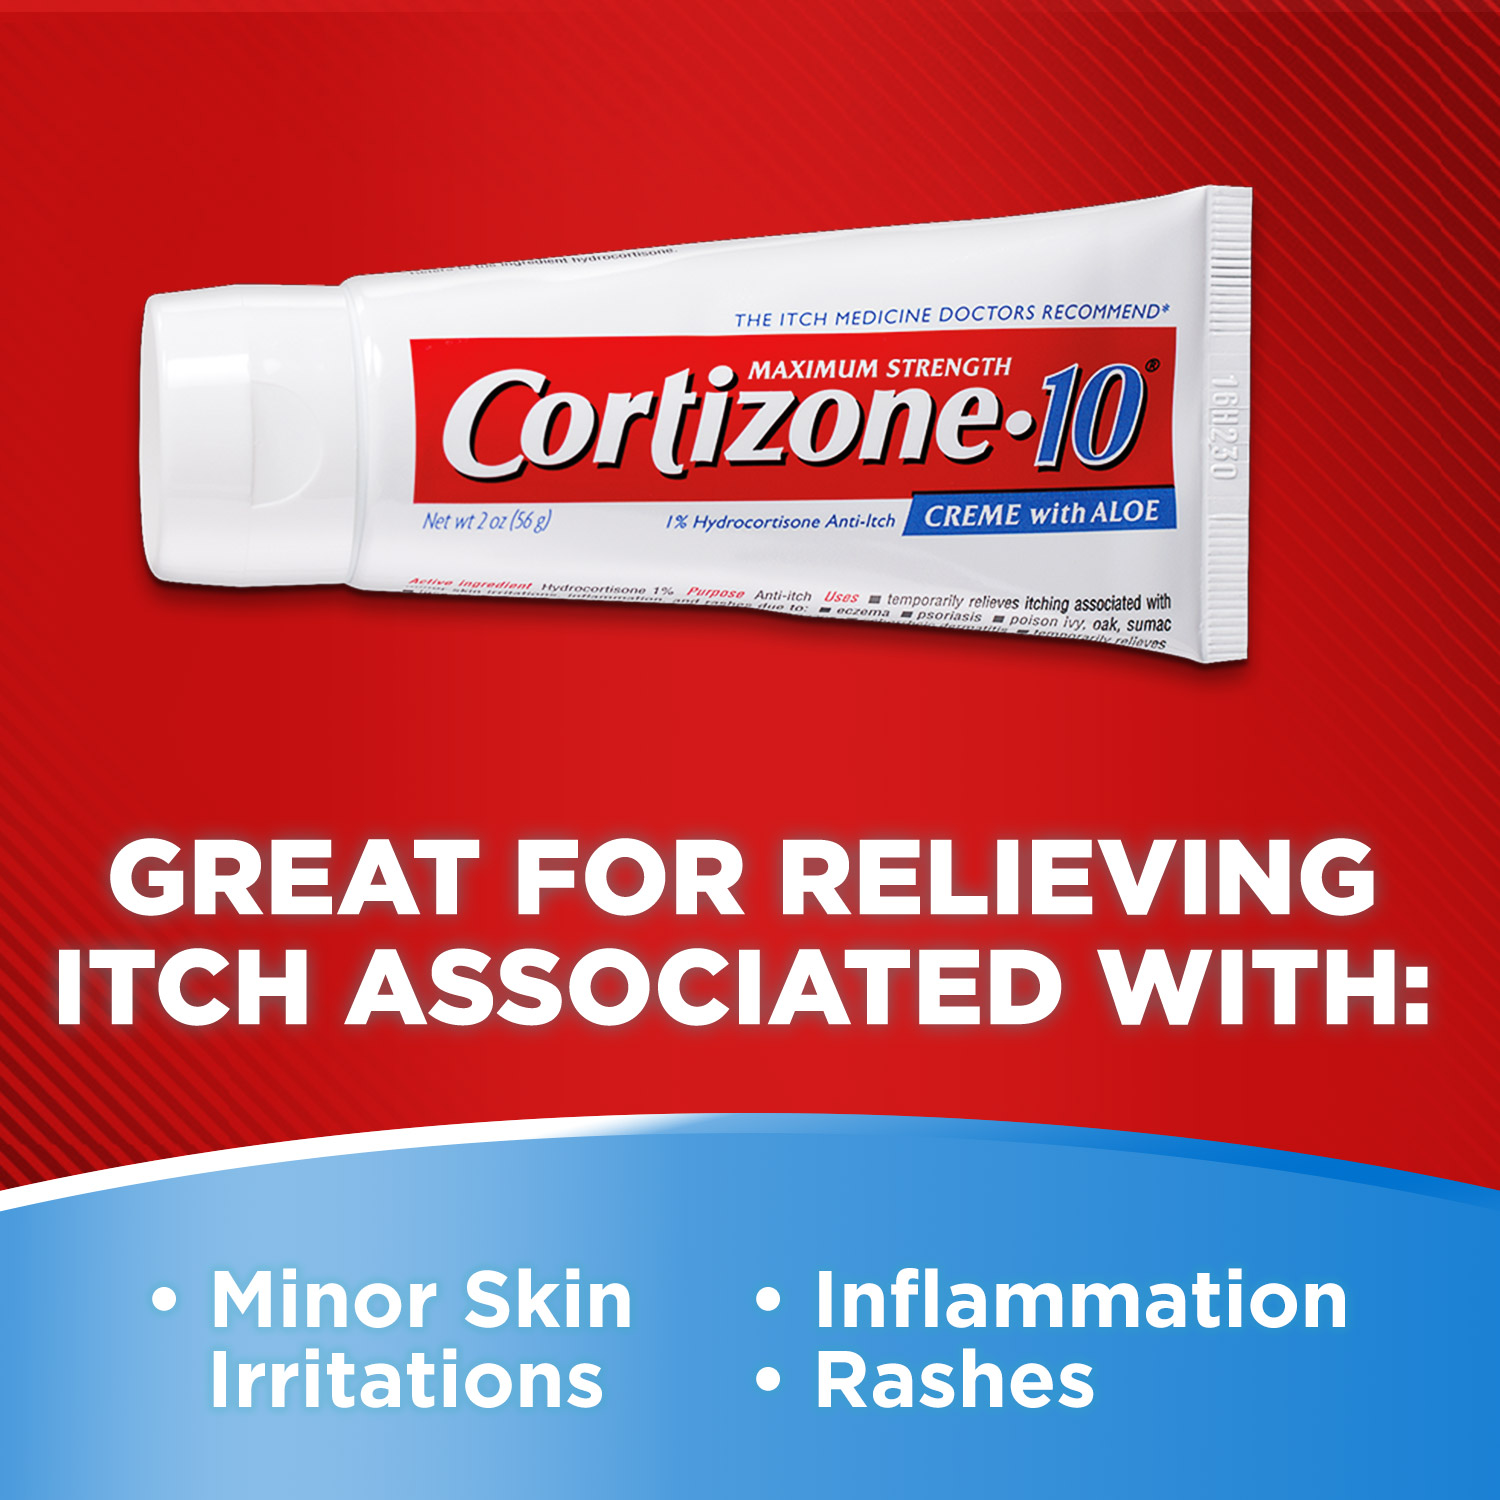 Cortizone 10 Maximum Strength, Anti Itch Crème (2 Oz) - image 4 of 7